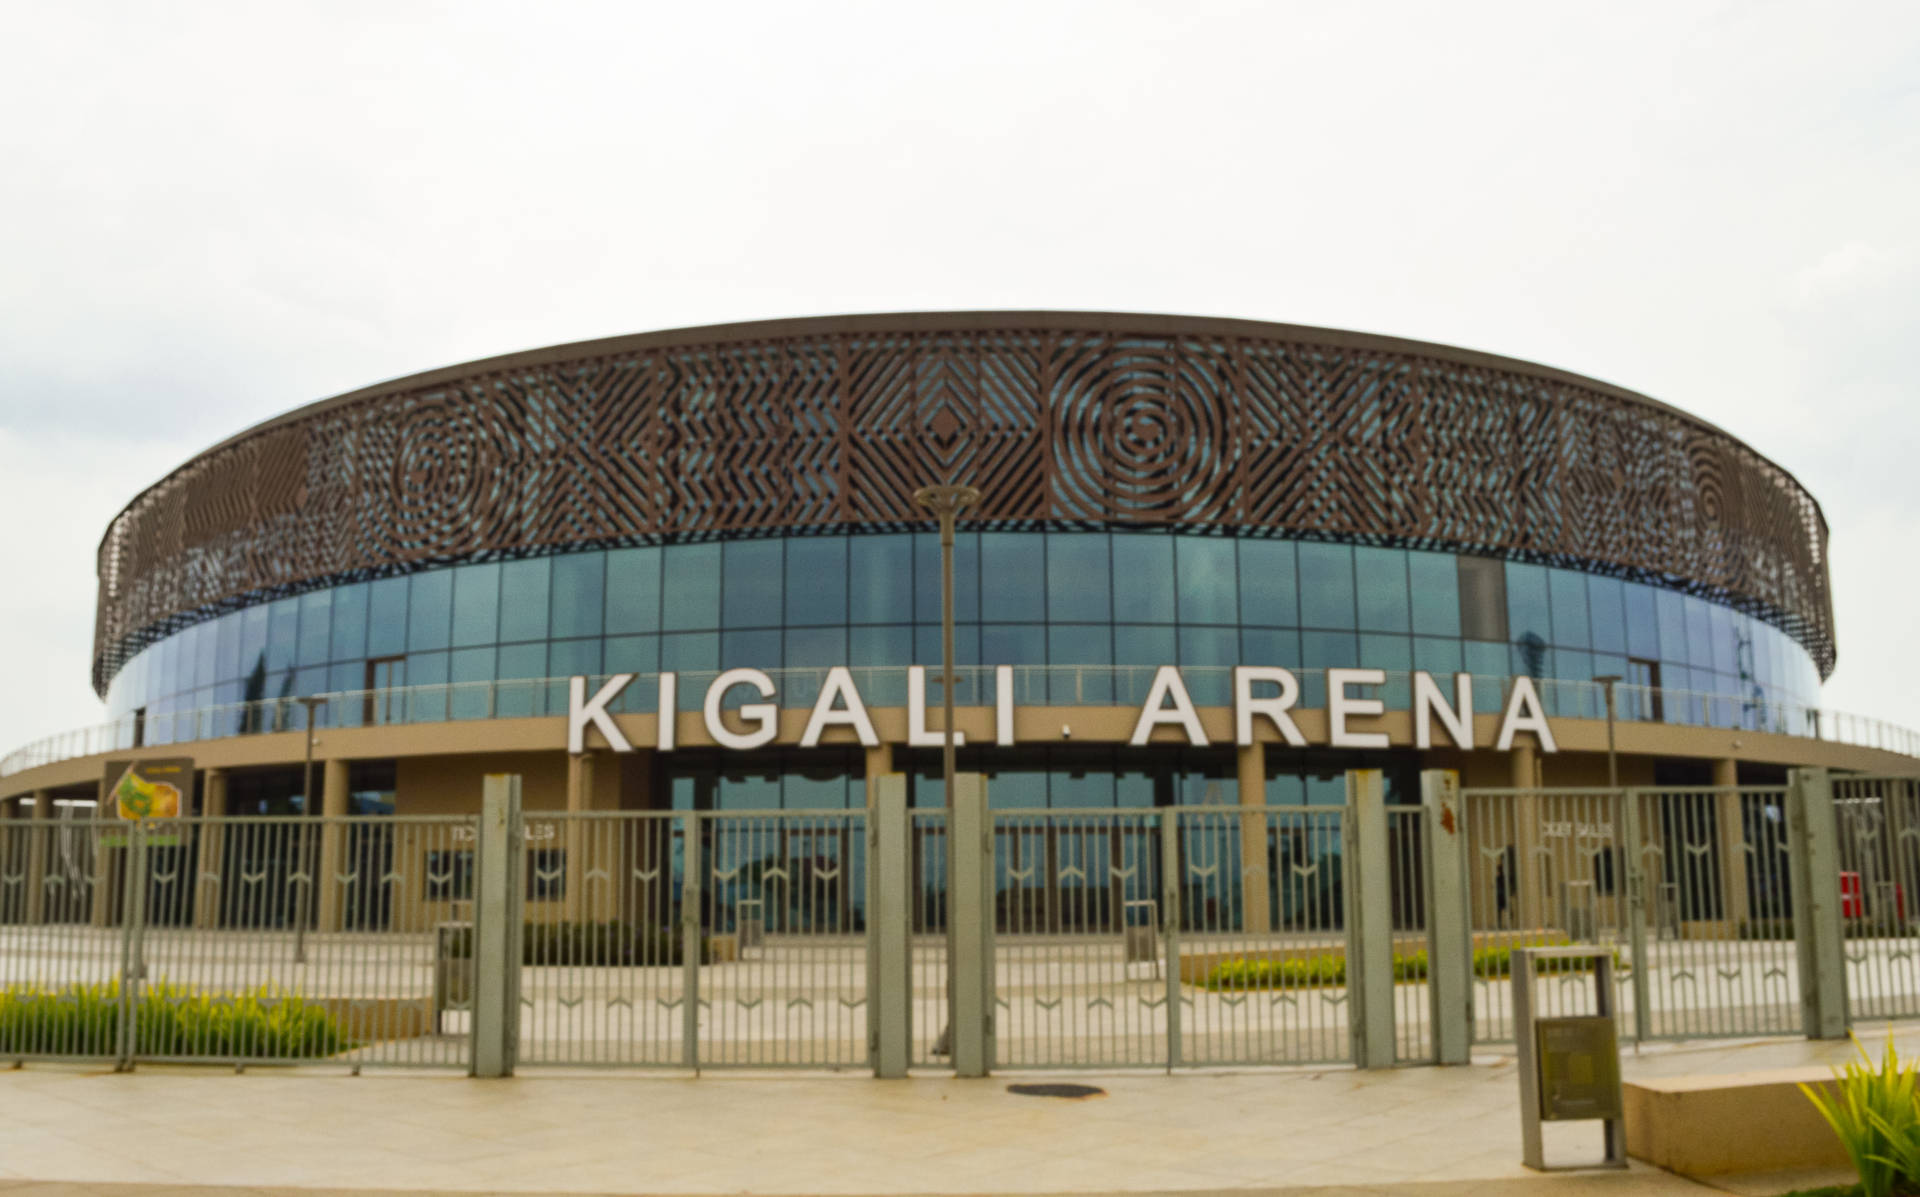 Rwanda Bk Arena Background